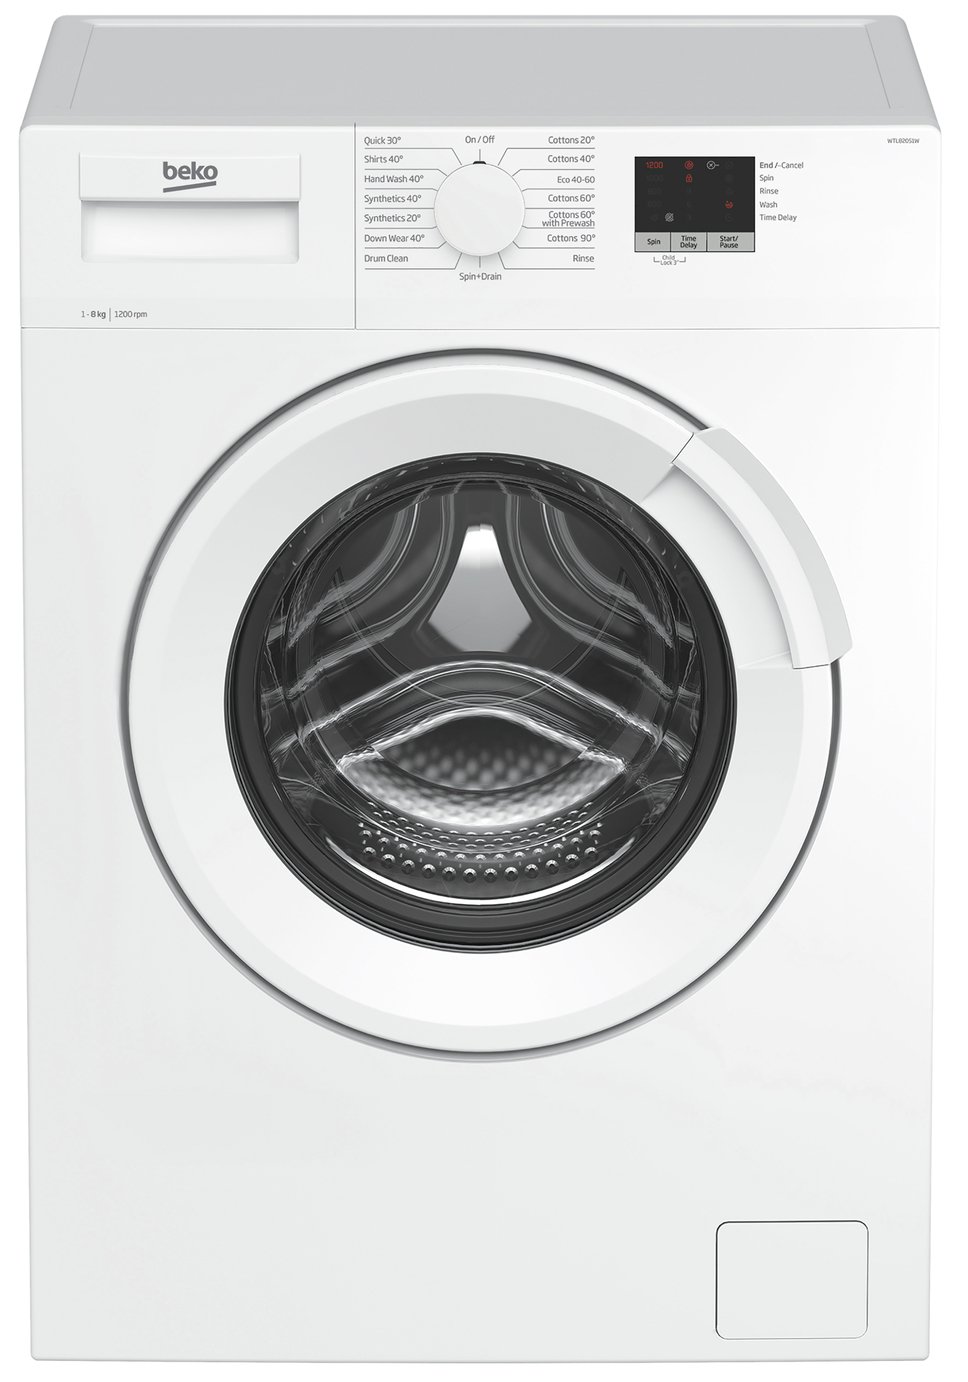 Beko WTL82051W 8KG 1200 Spin Washing Machine - White